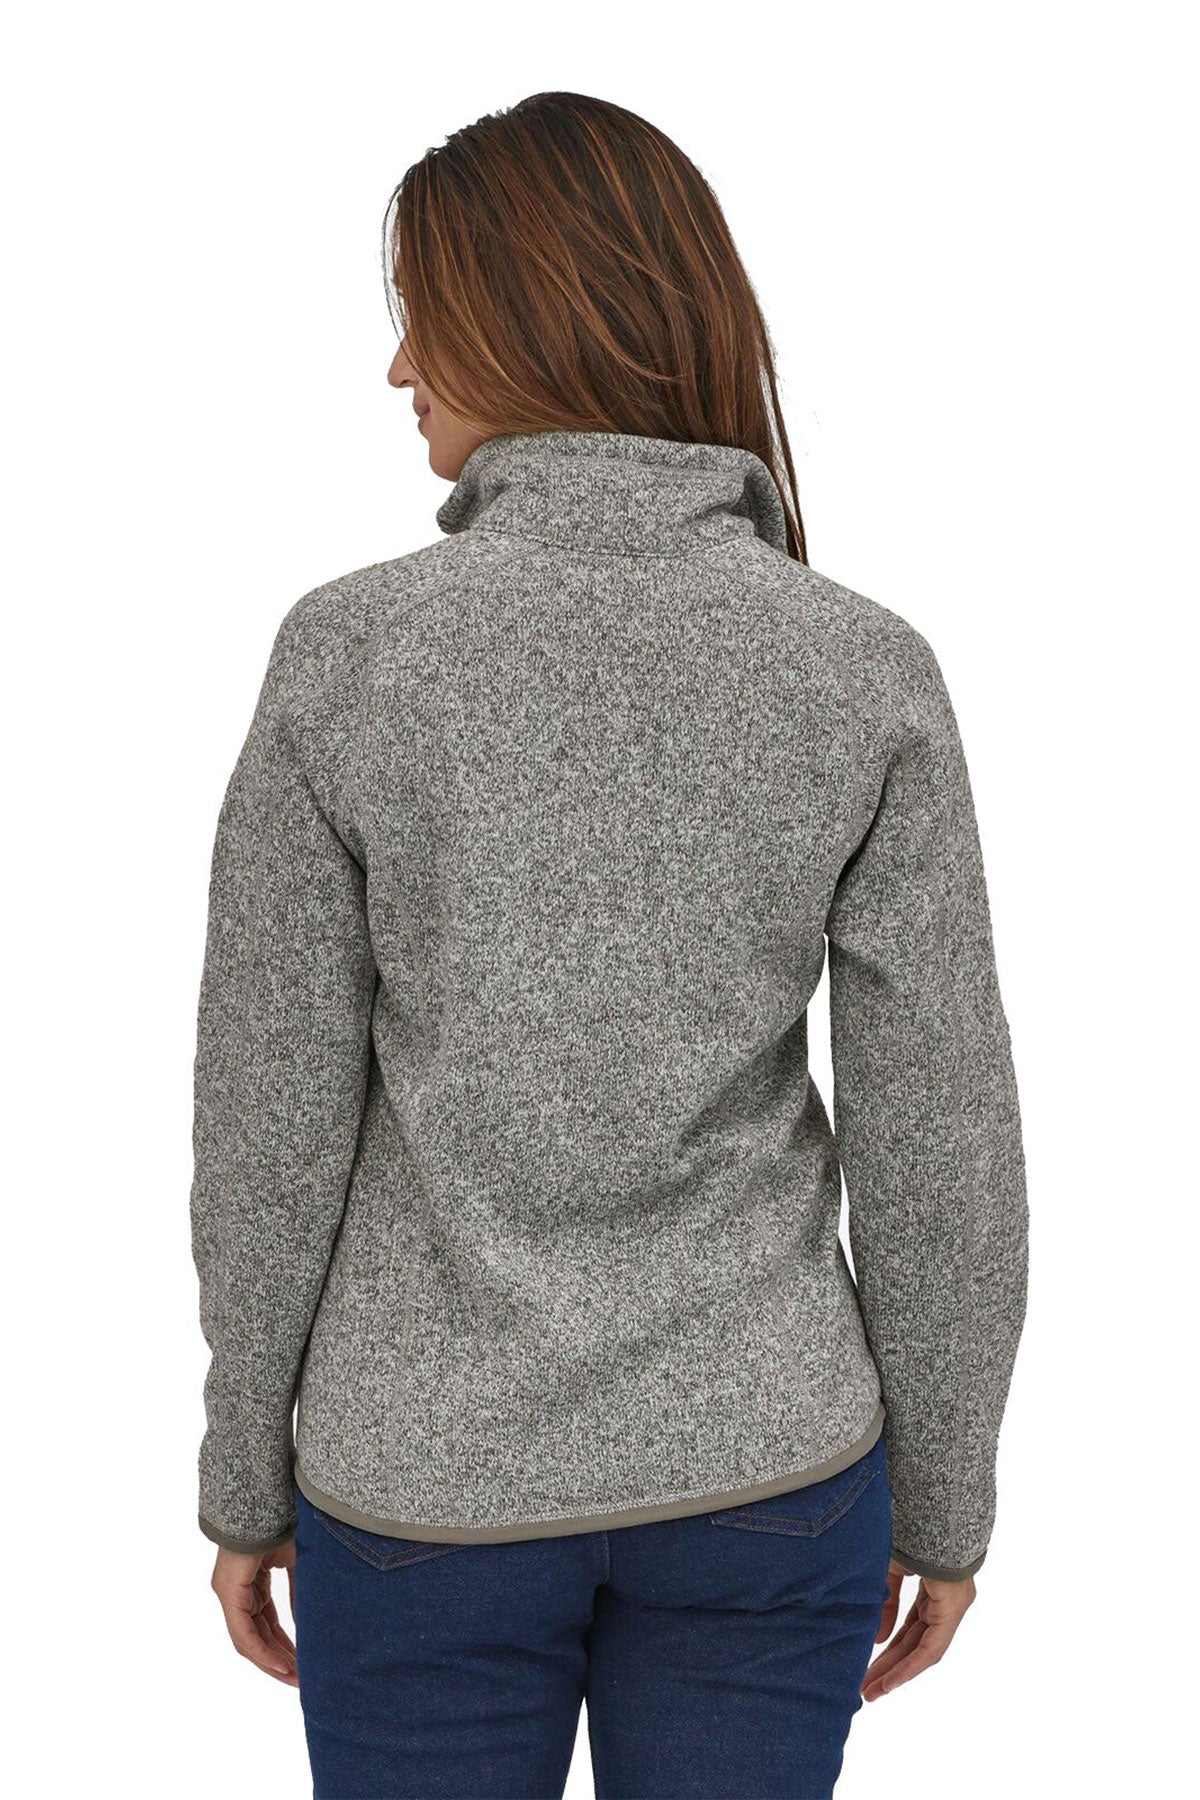 Patagonia Women's Better Sweater Fleece Jacket –